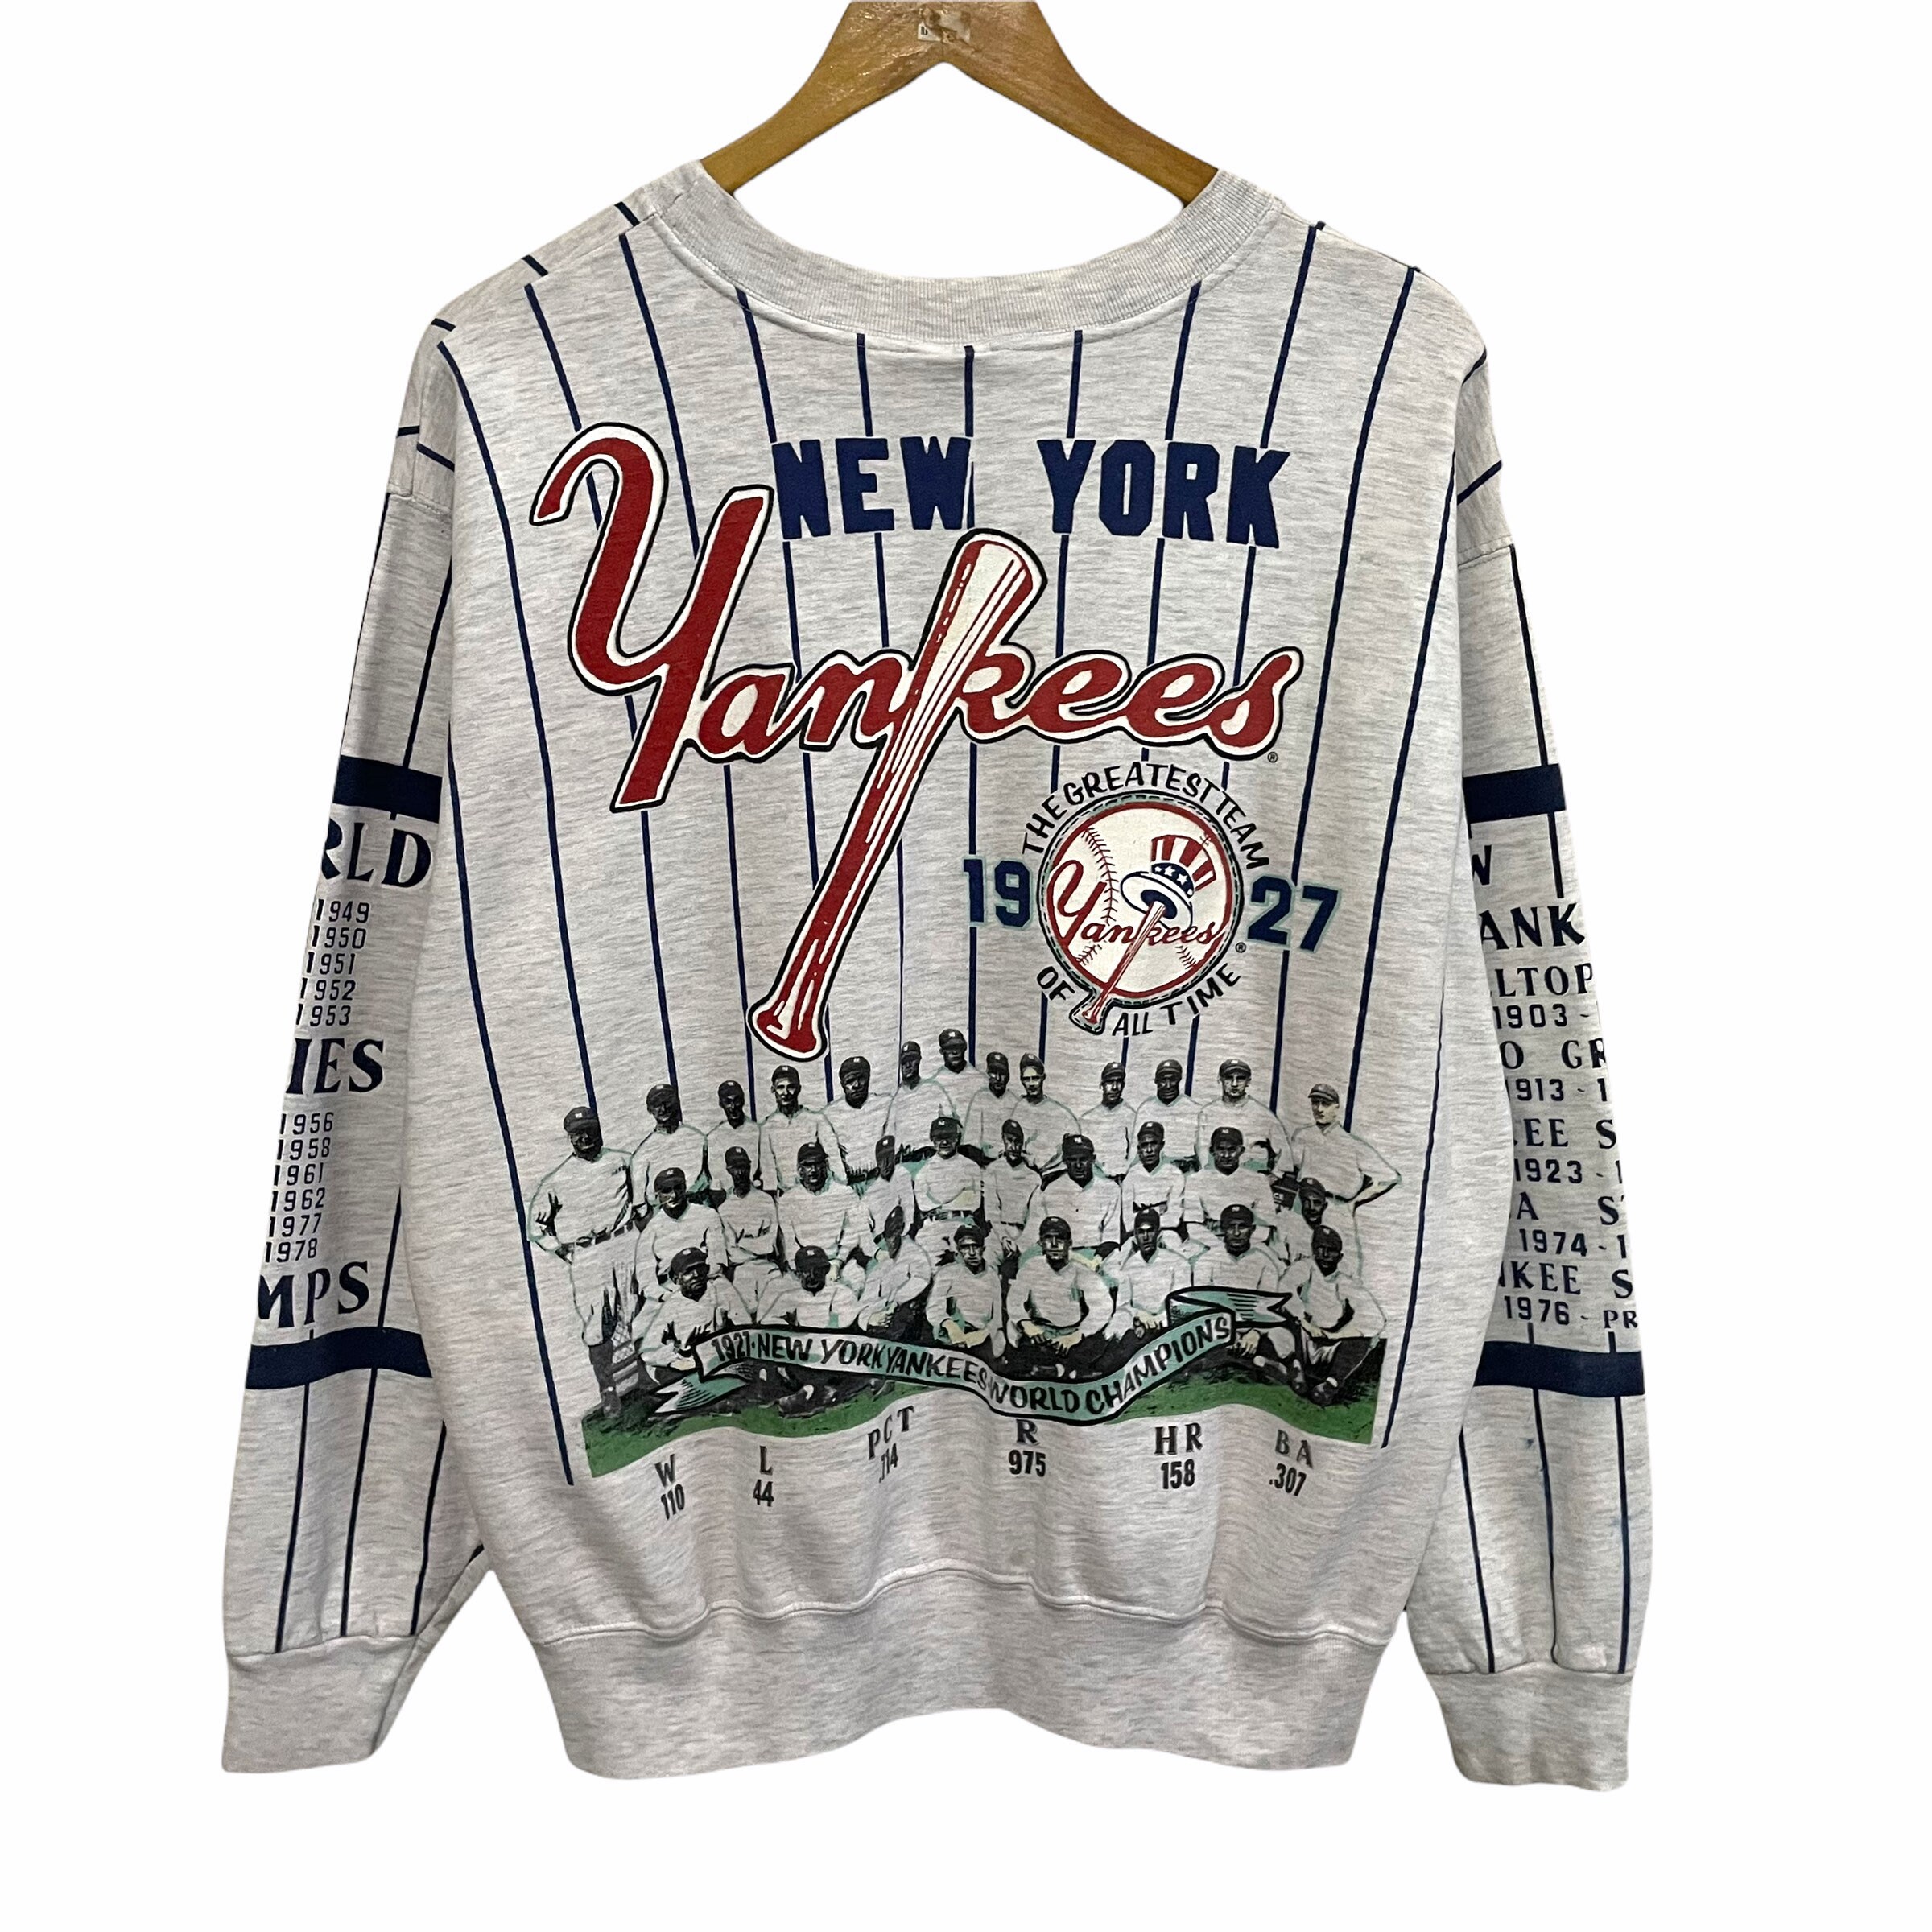 AUSWAHL Vintage New York Yankees Sweatshirt New York Yankees - .de